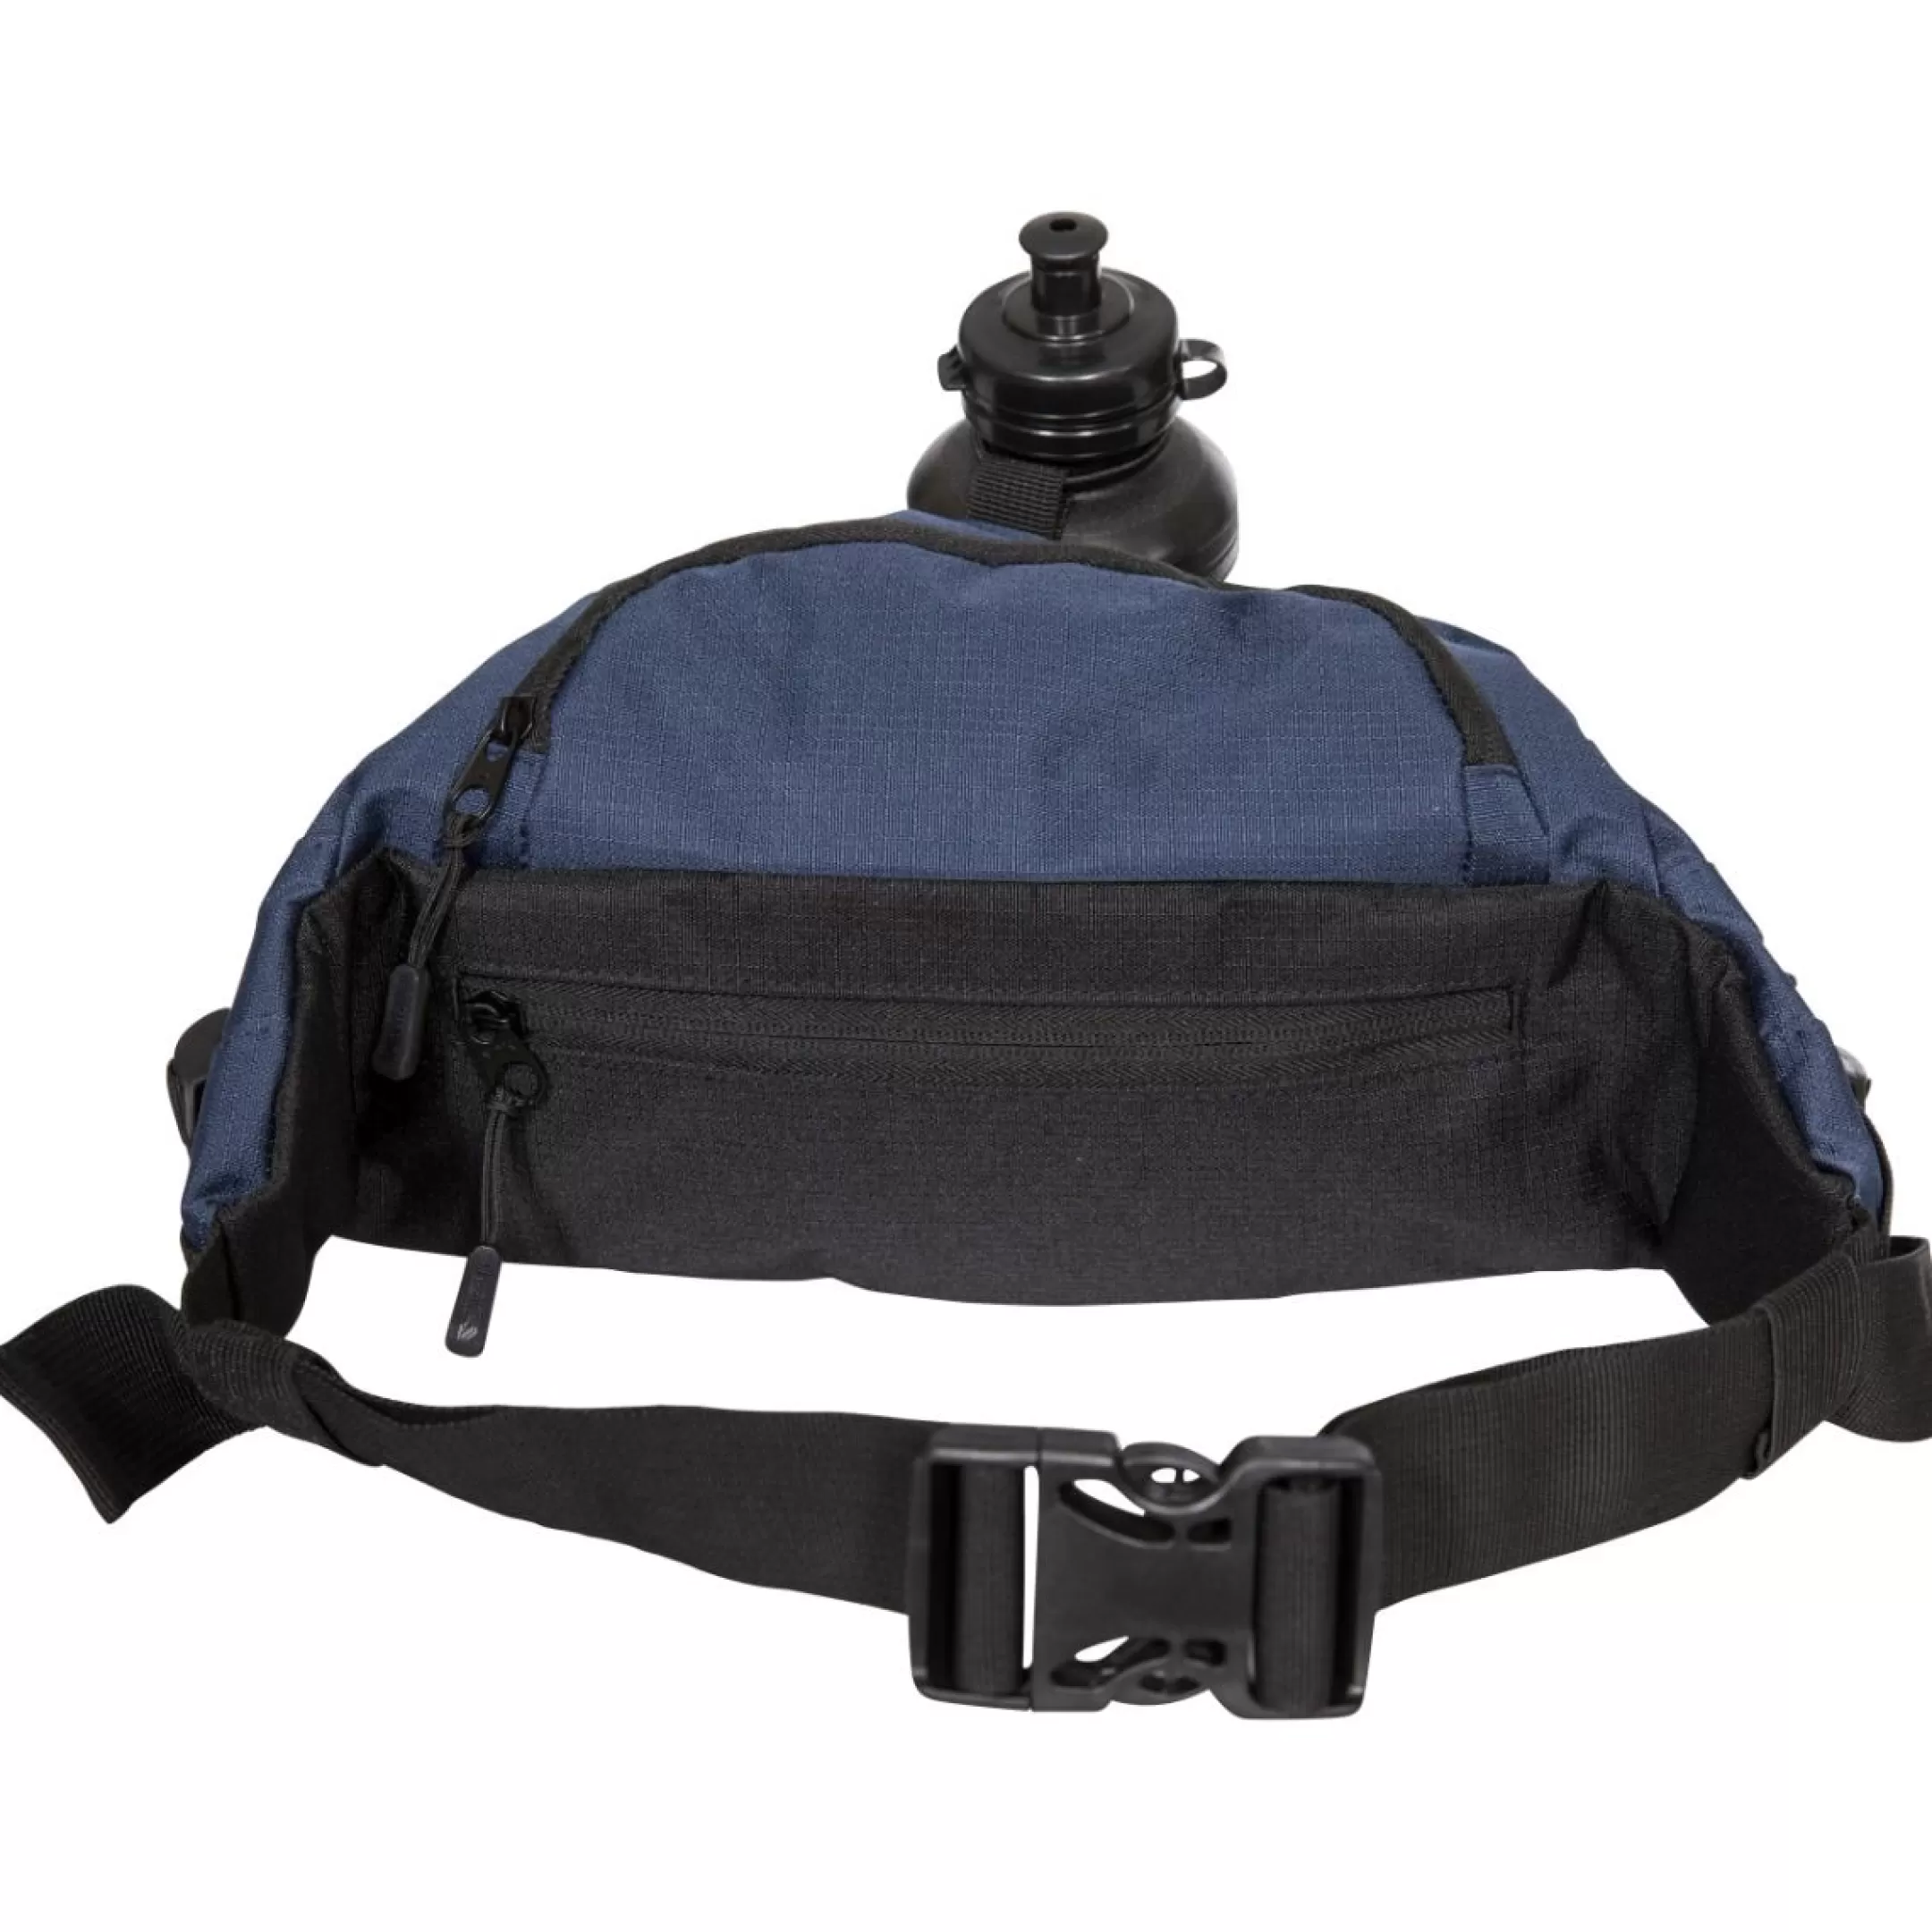 5 Litre Travel Bum Bag with Padded Hip Belt Vasp | Trespass Shop